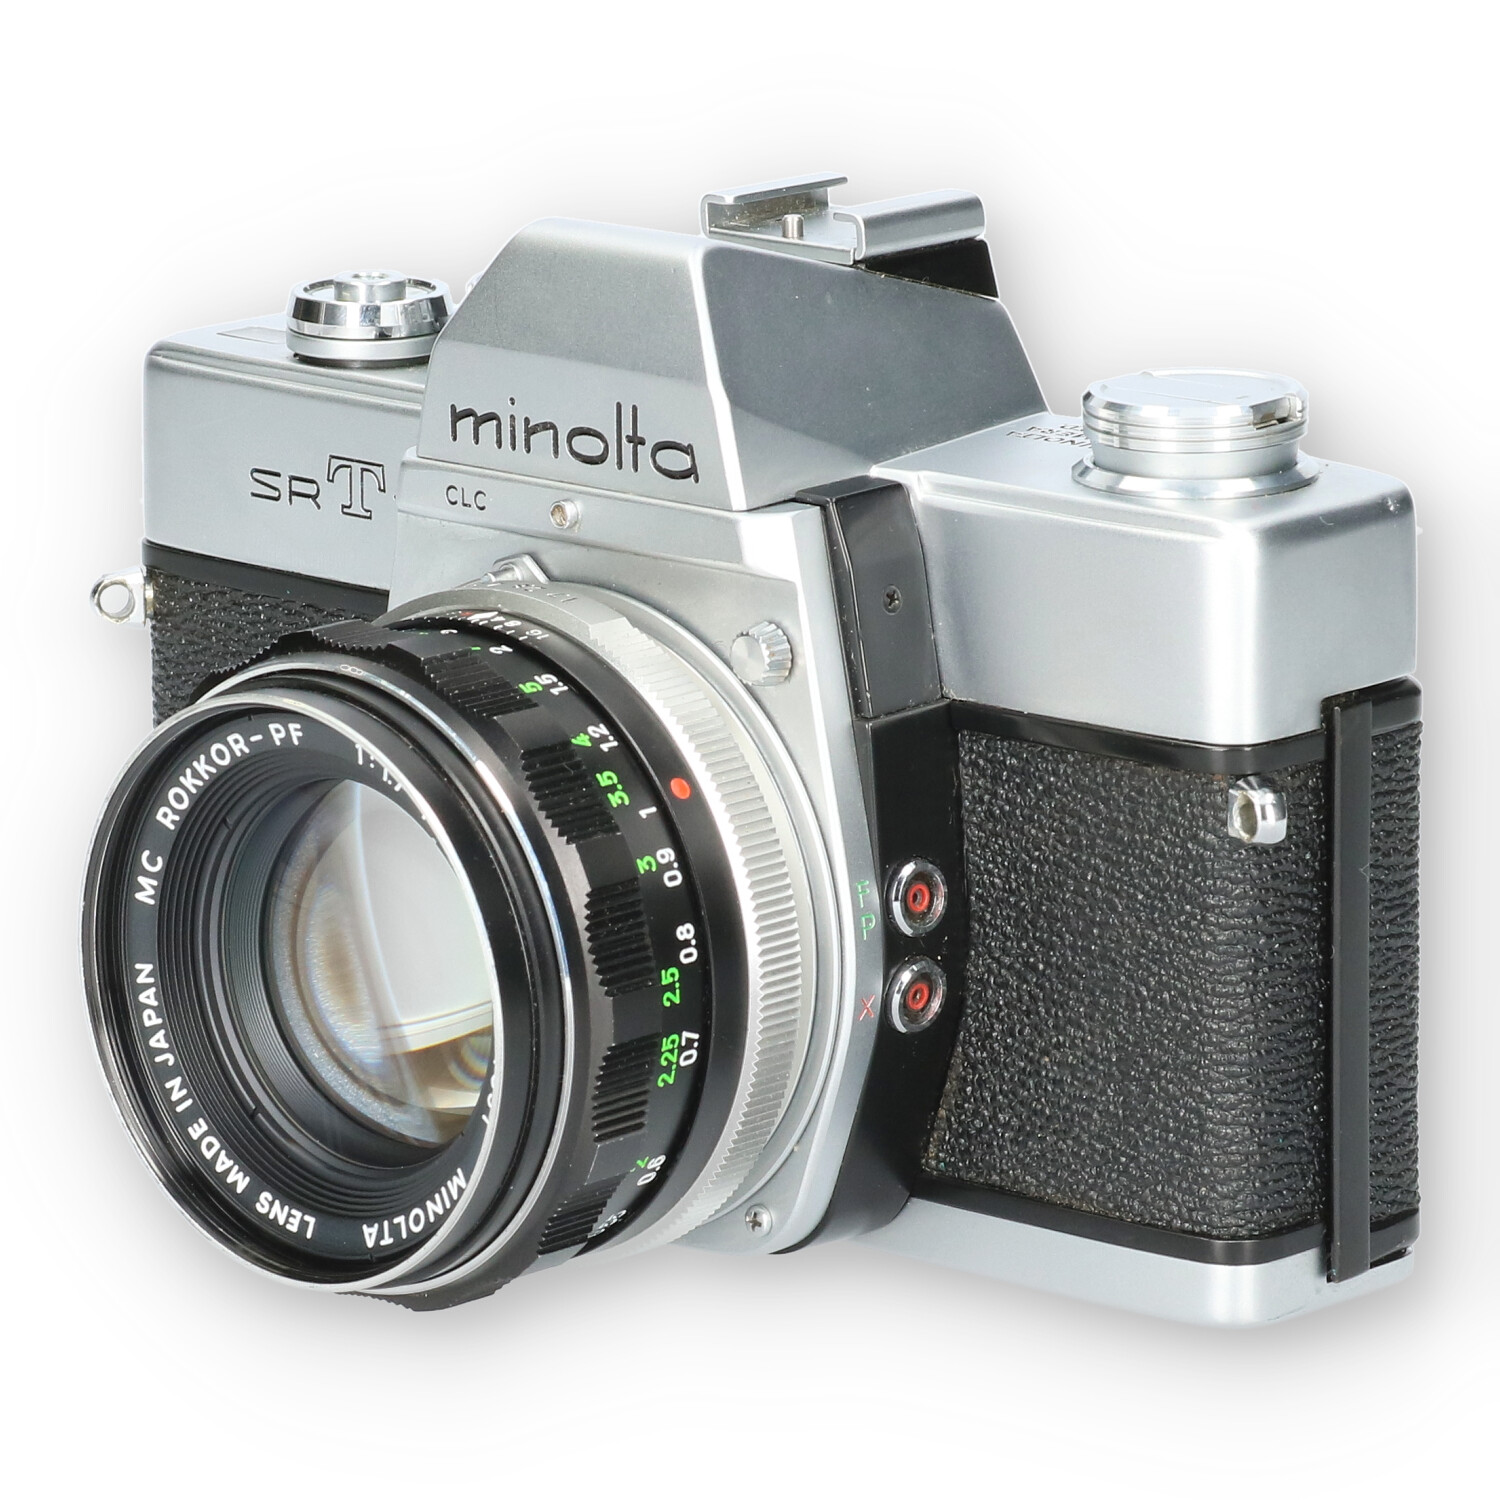 Minolta srT 101 + Rokkor-PF 55mm f/1.7 - No-Digital